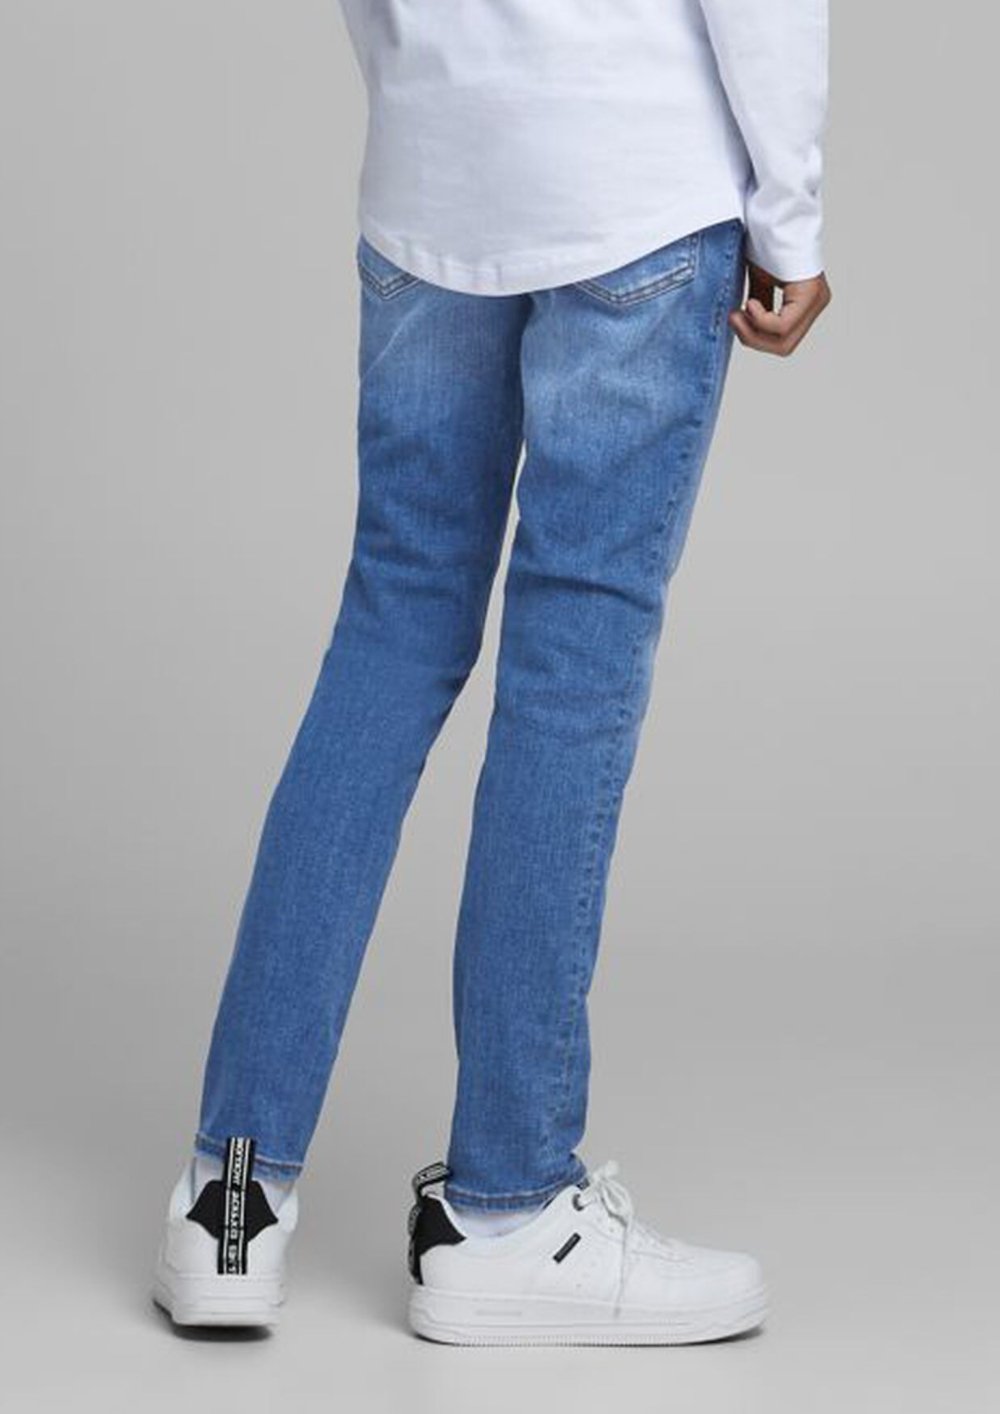 Jack & Jones Boys Skinny Fit Jeans - Liam - Light Blue - GLS Clothing